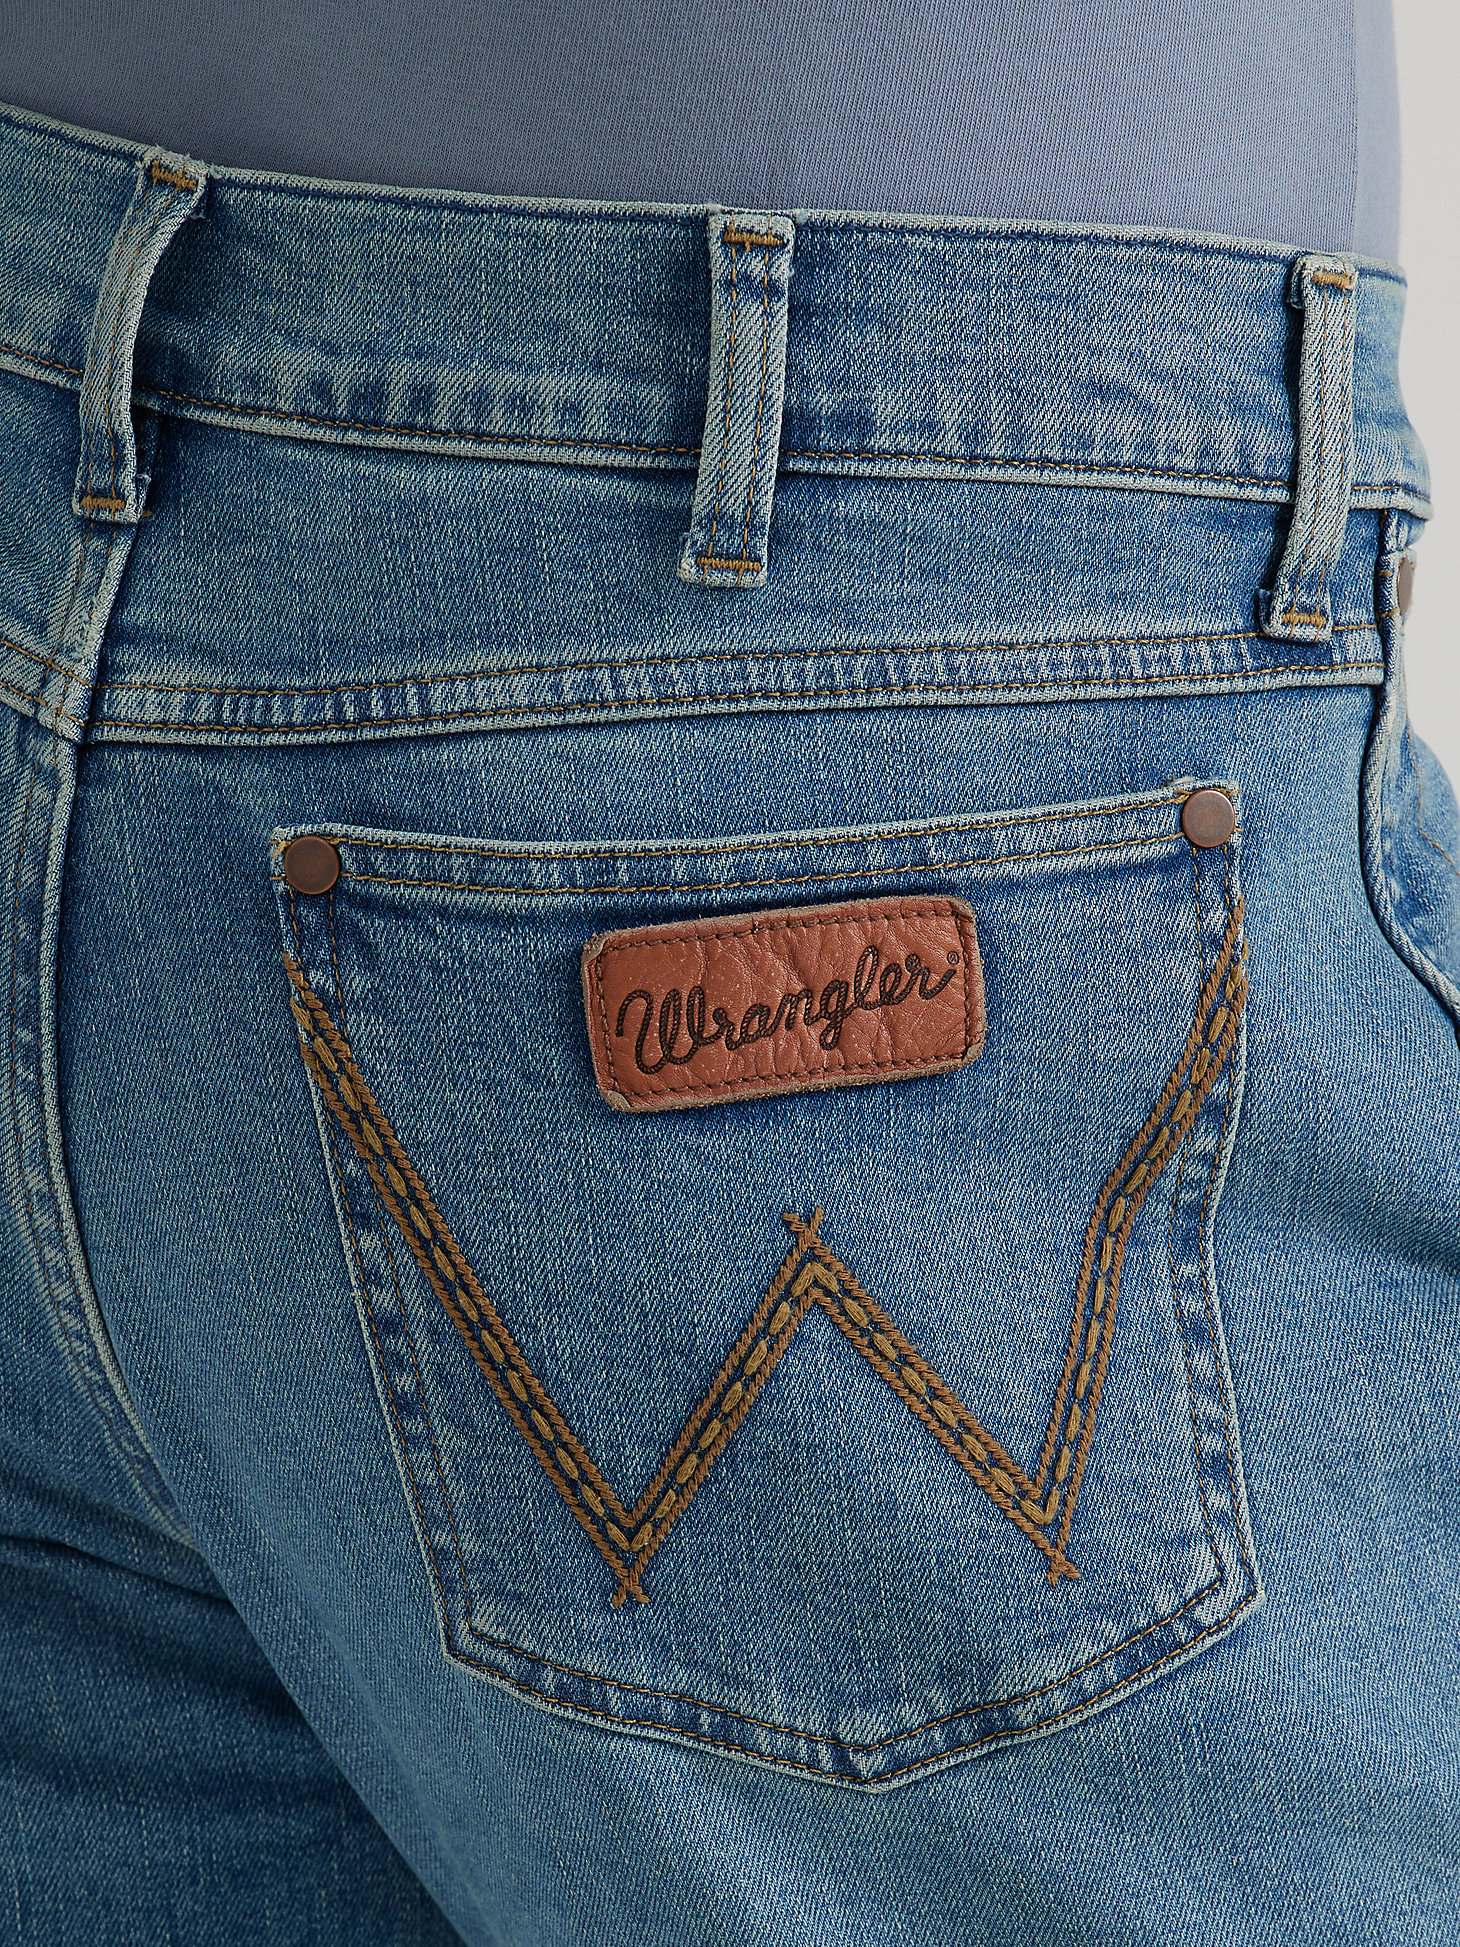 Men's Wrangler Retro® Slim Fit Bootcut Jean in Flintlock alternative view 5